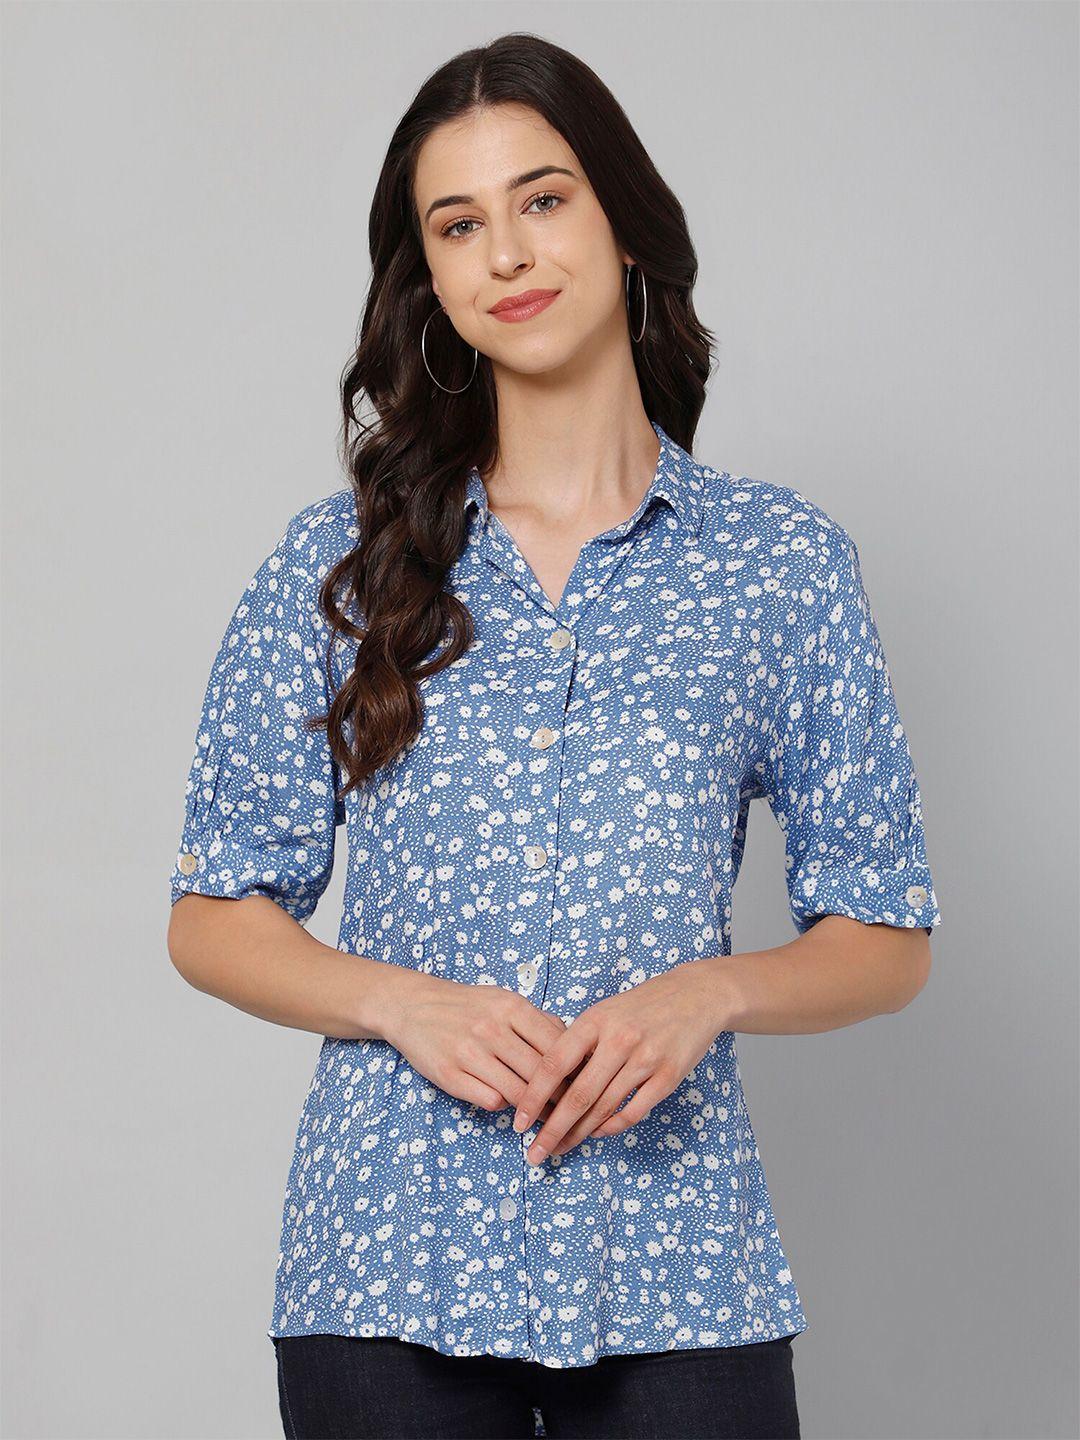 cantabil women blue & white floral print shirt style top